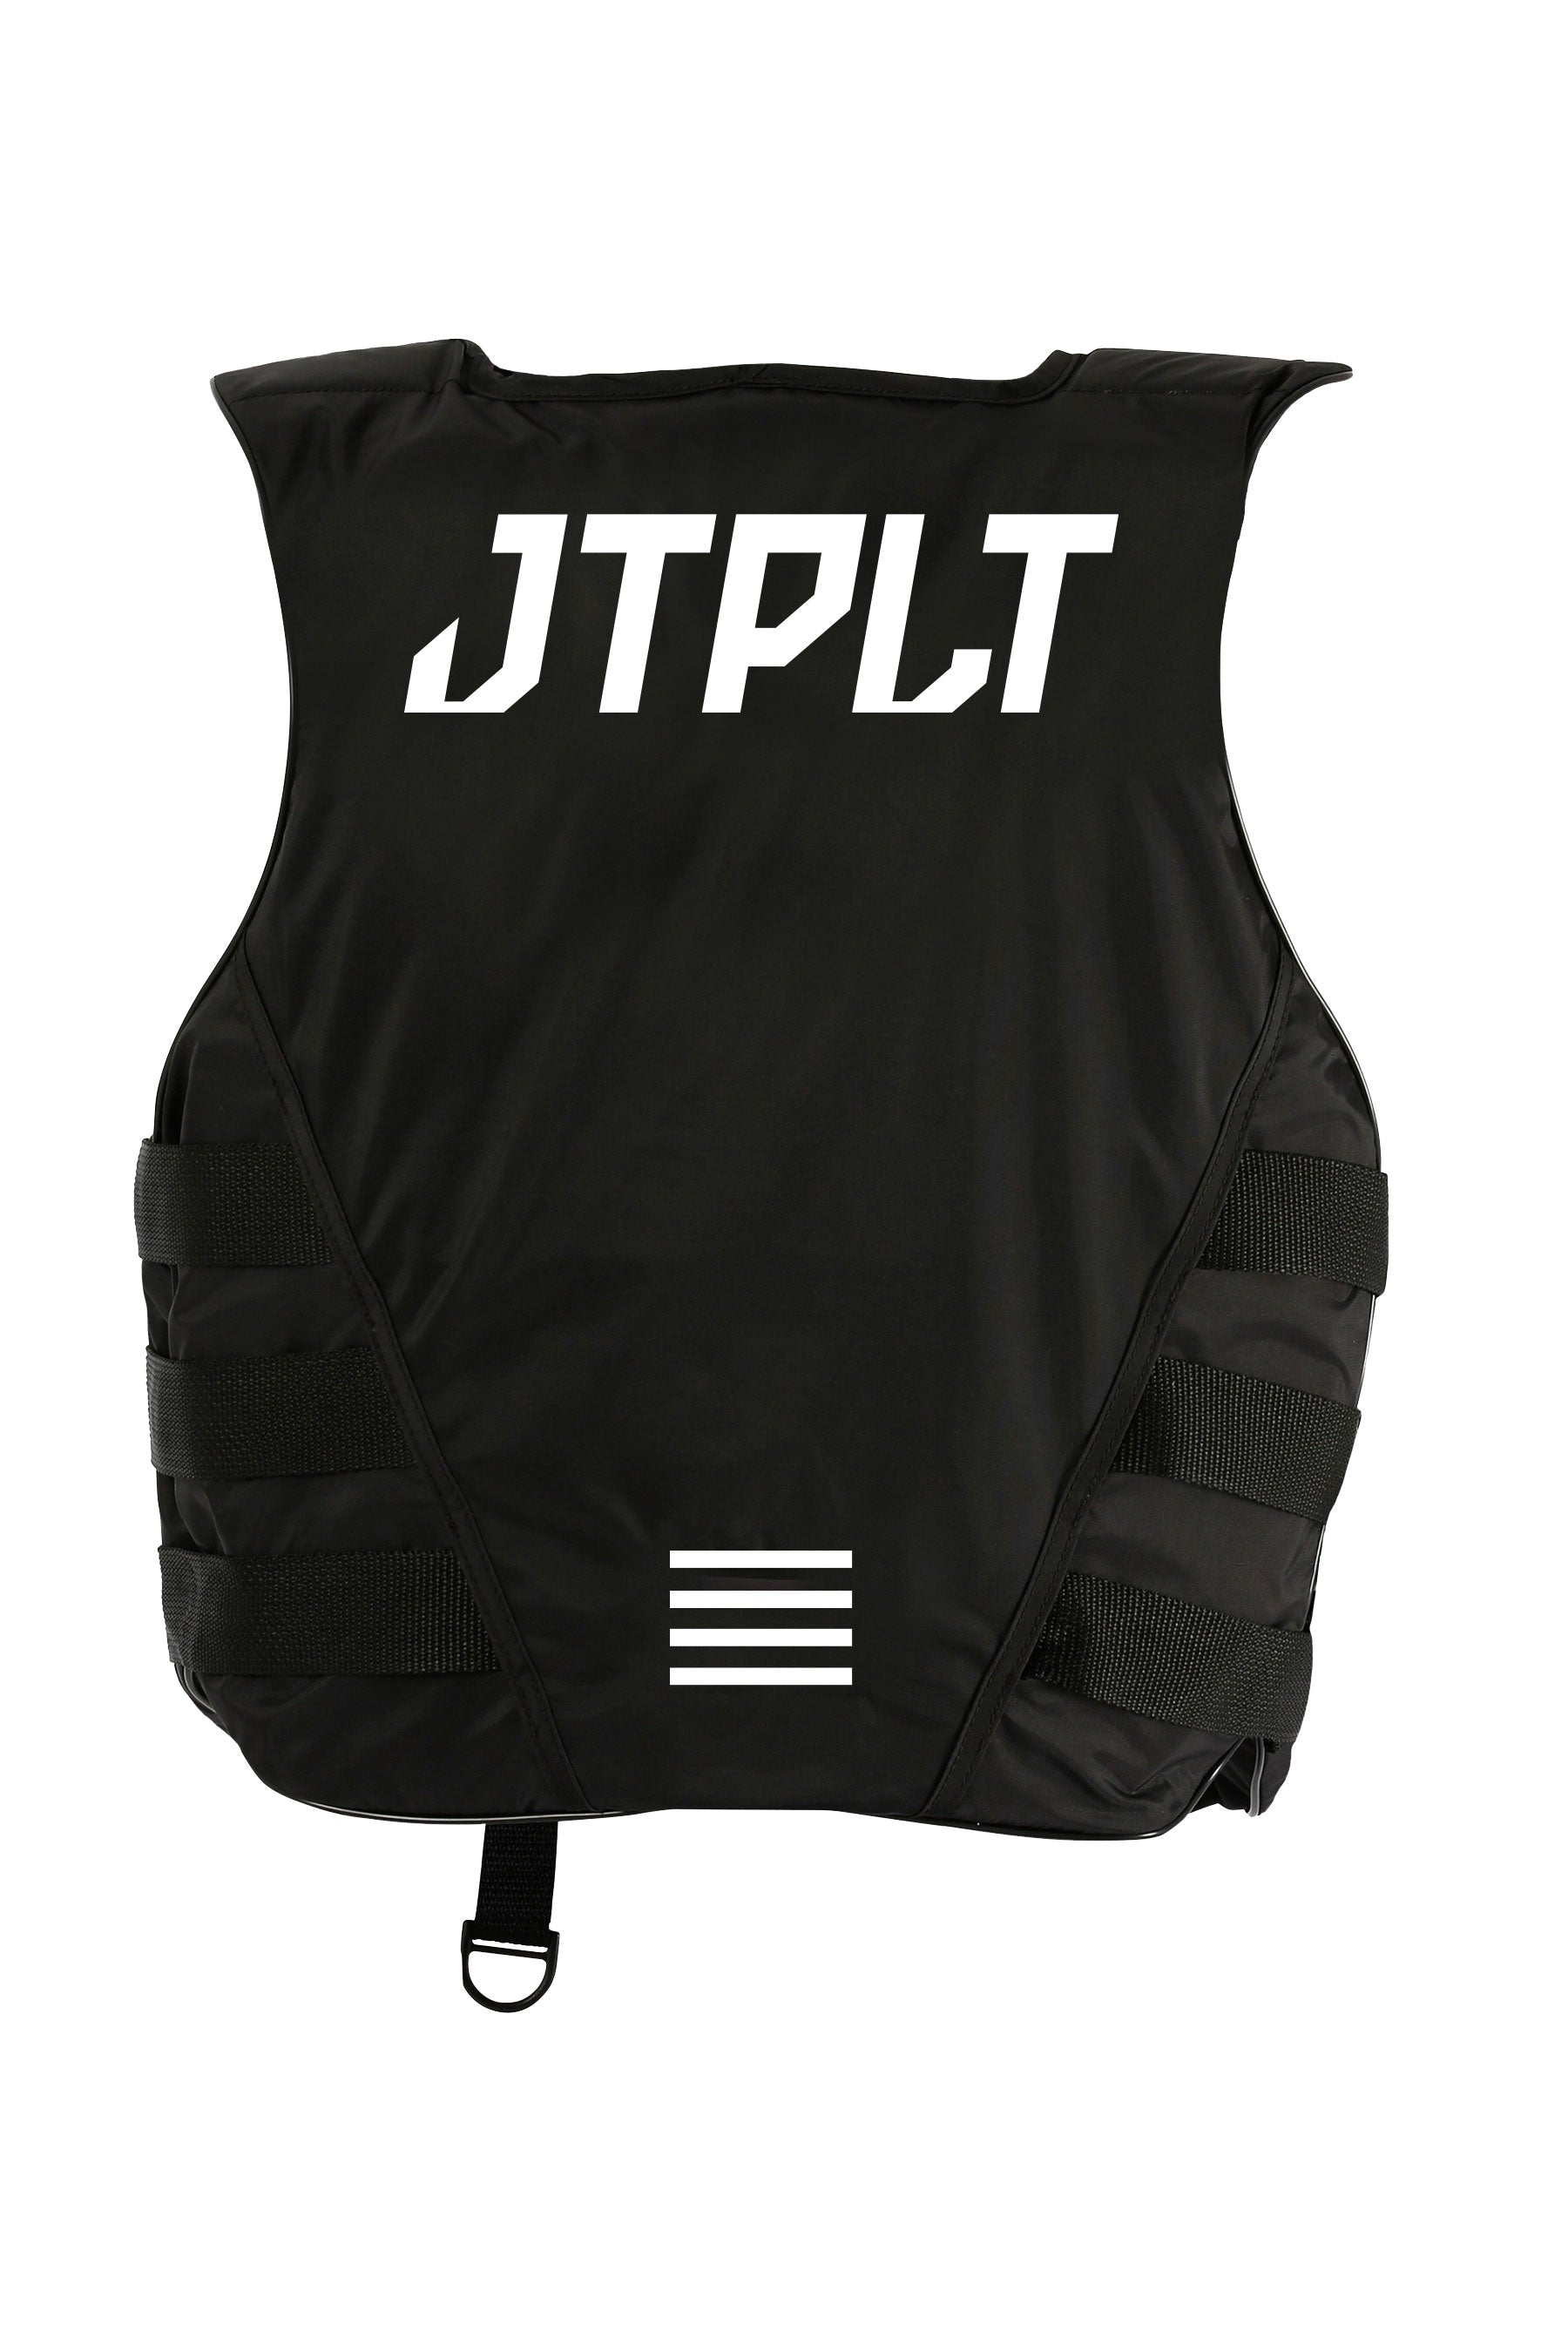 Jetpilot Rx Vault S/E Mens Nylon Life Vest Black/white 2